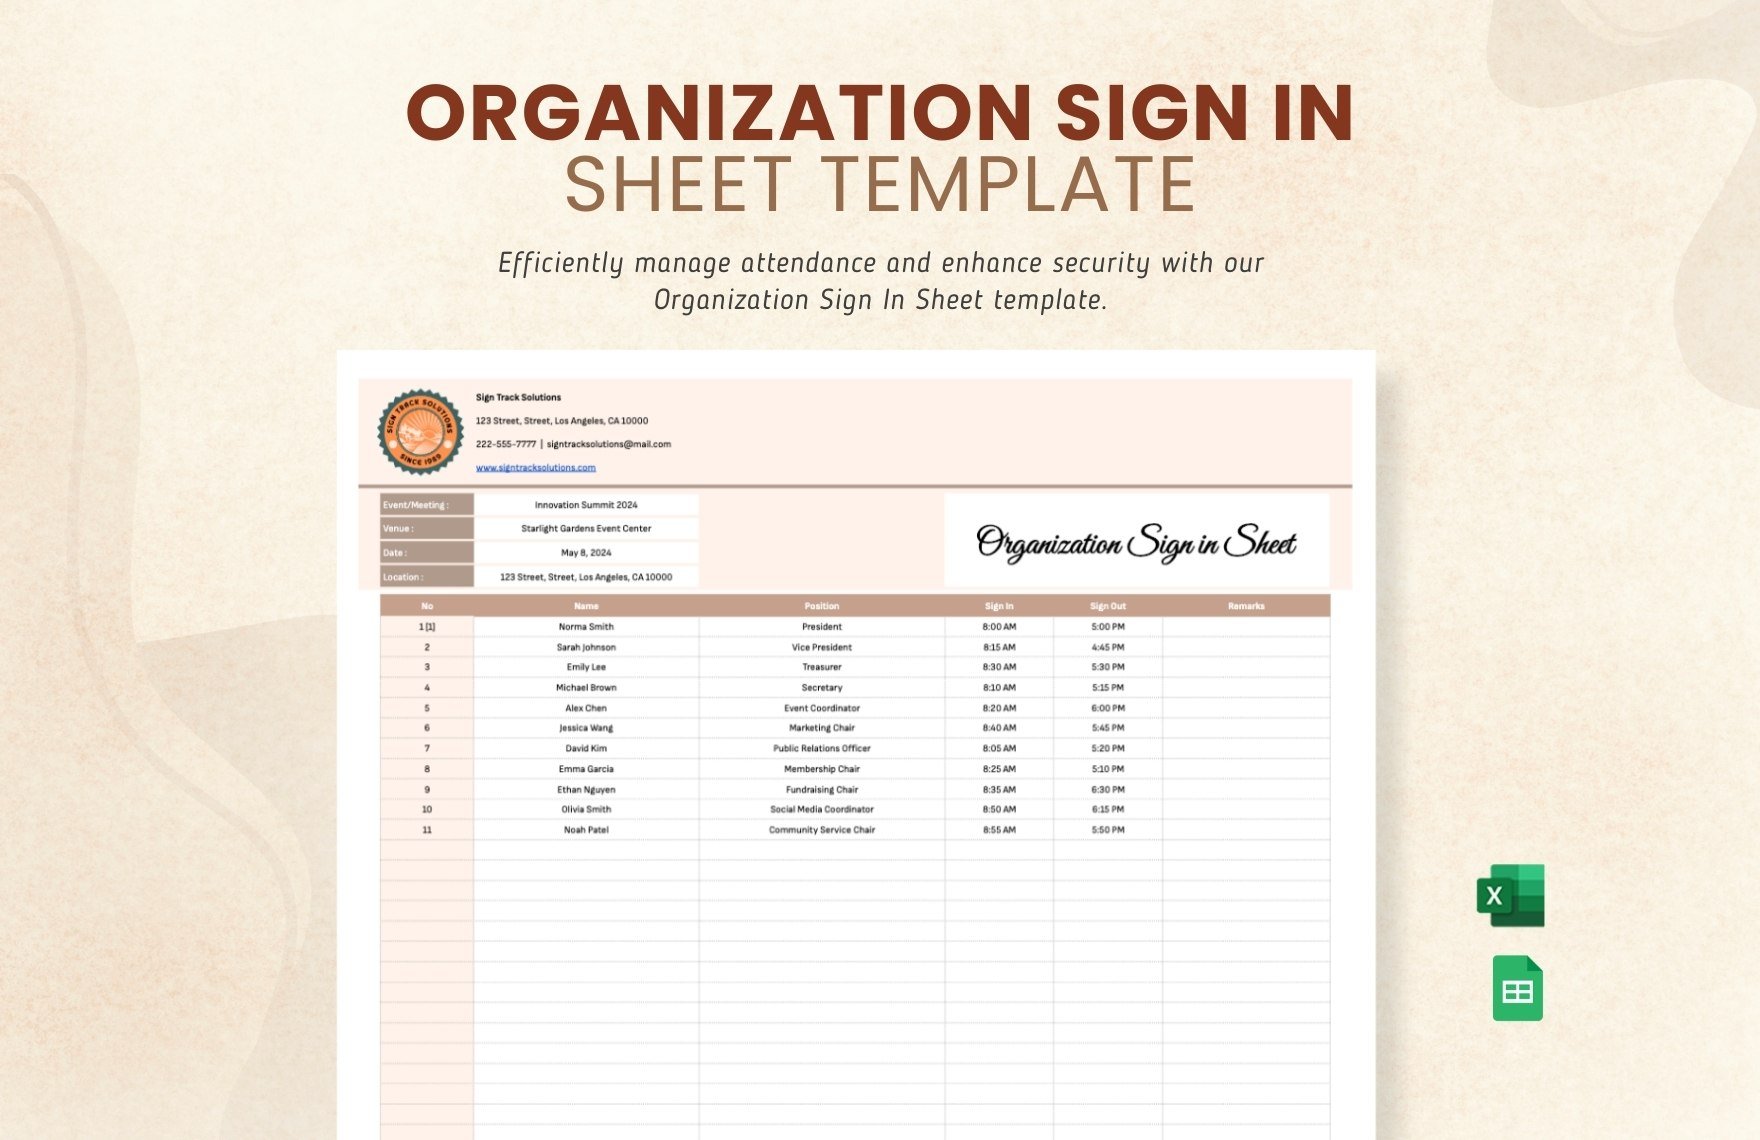 Organization Sign in Sheet Template